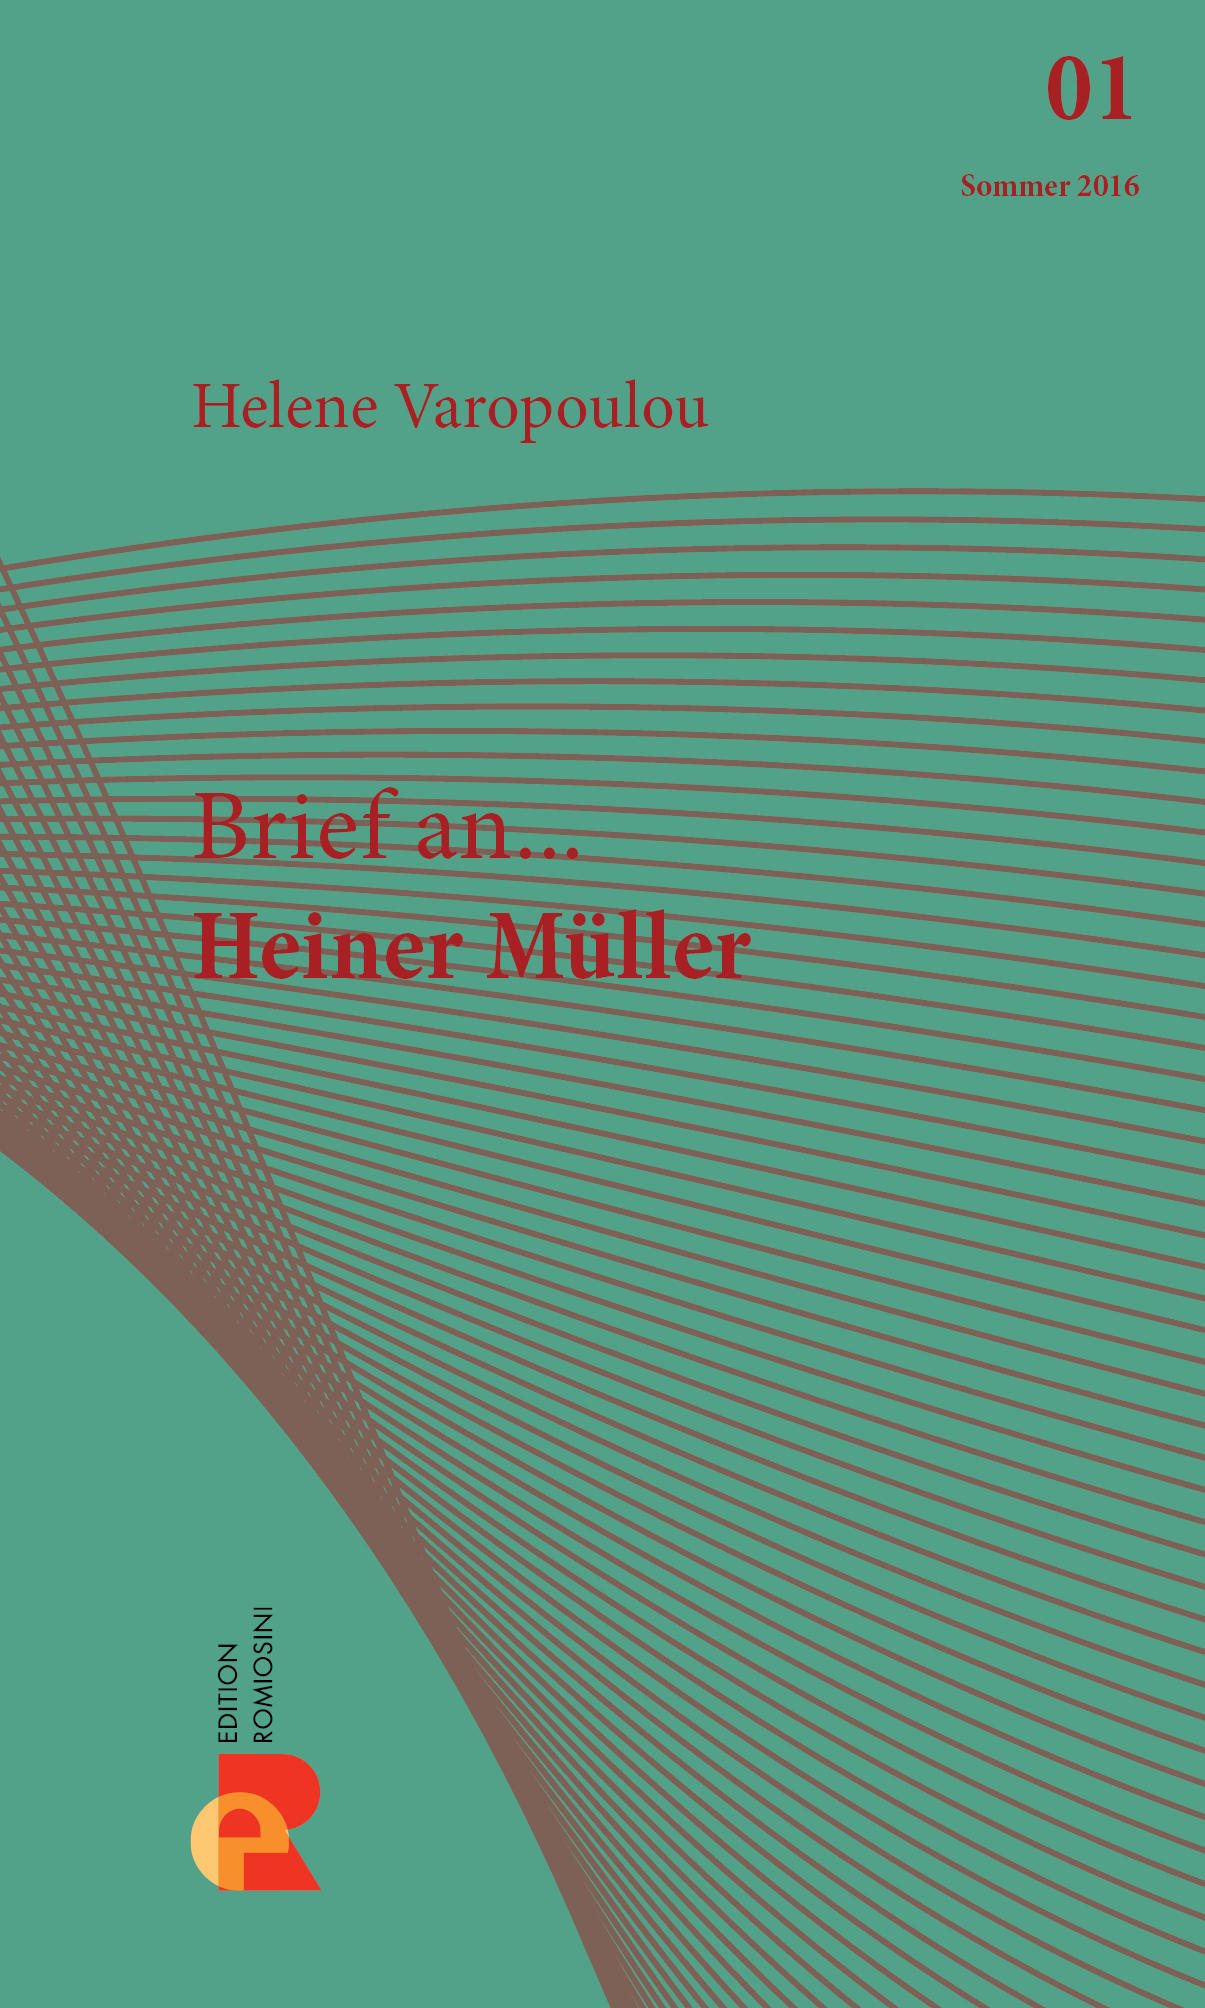 Helene Varopoulou: Brief an Heiner Müller